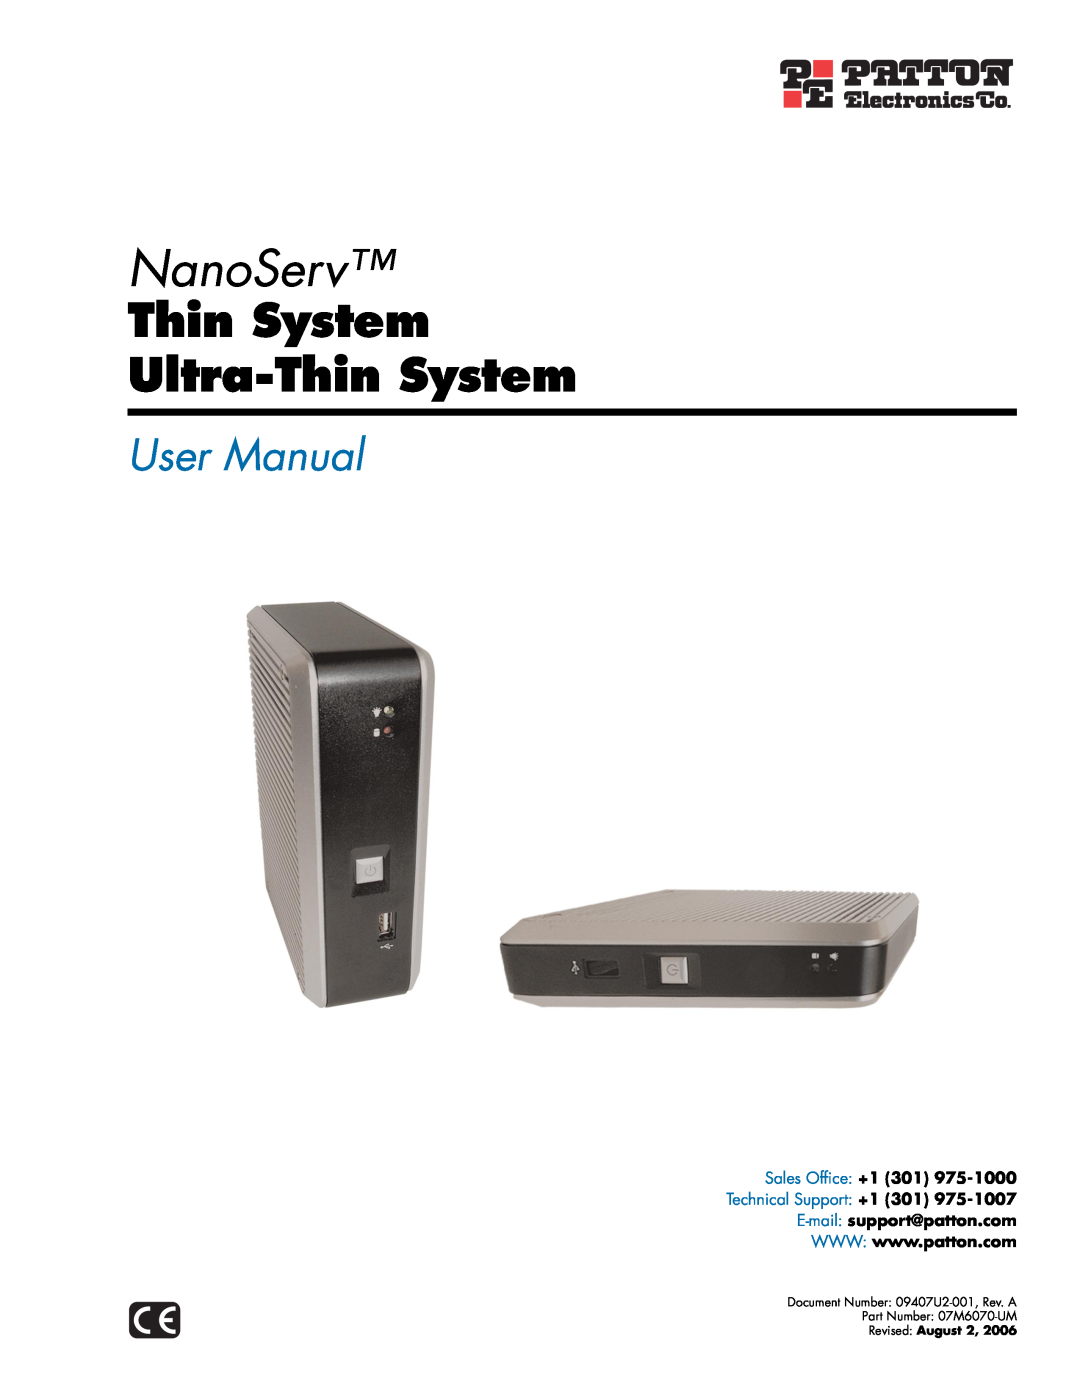 Patton electronic 07M6070-UM user manual NanoServ, Thin System Ultra-Thin System, User Manual, Technical Support +1 301 